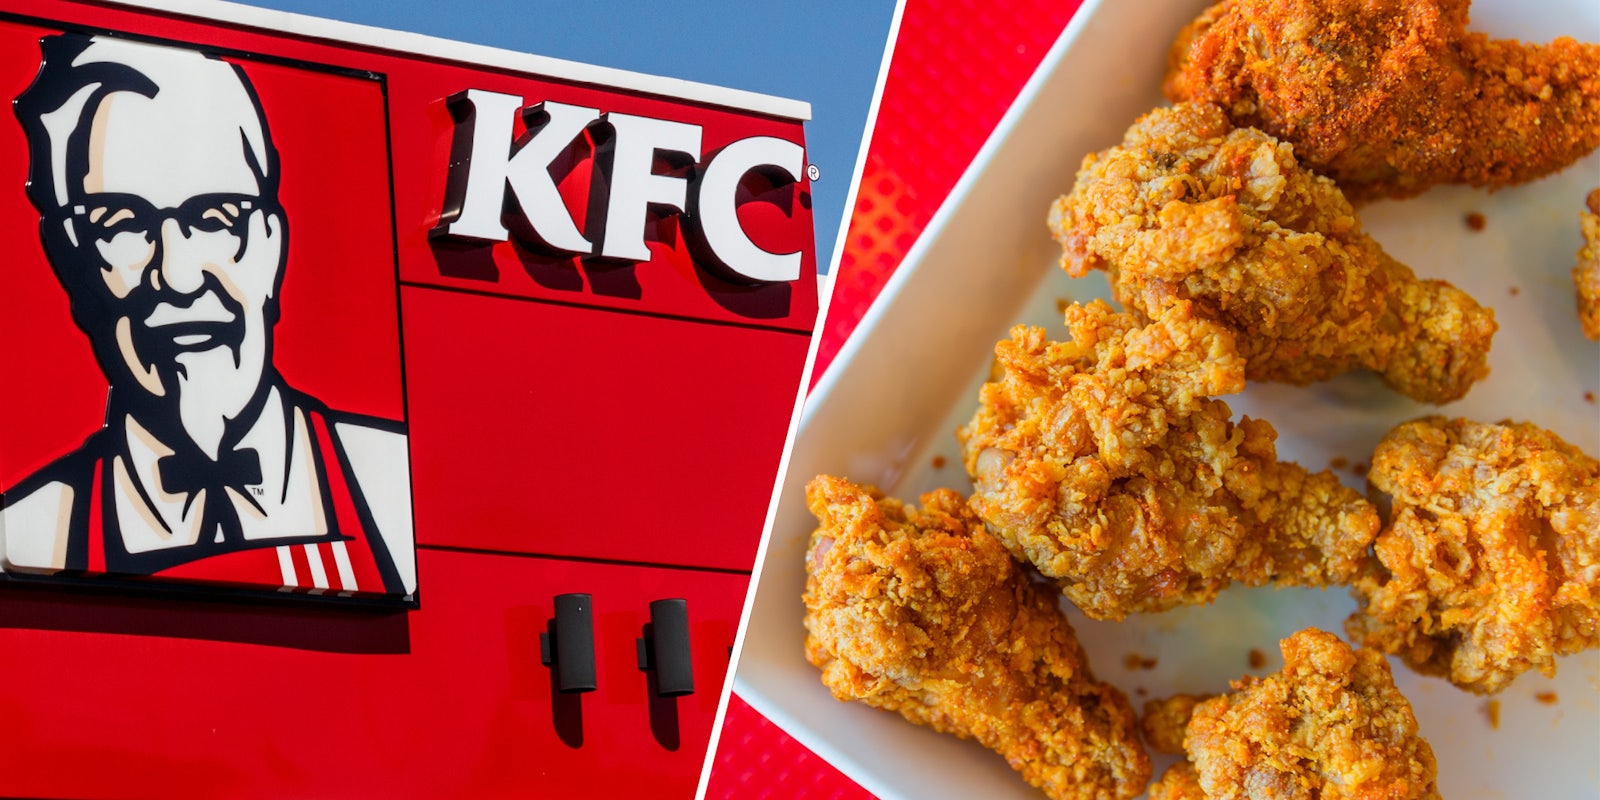 KFC exterior(l), Fried chicken(r)